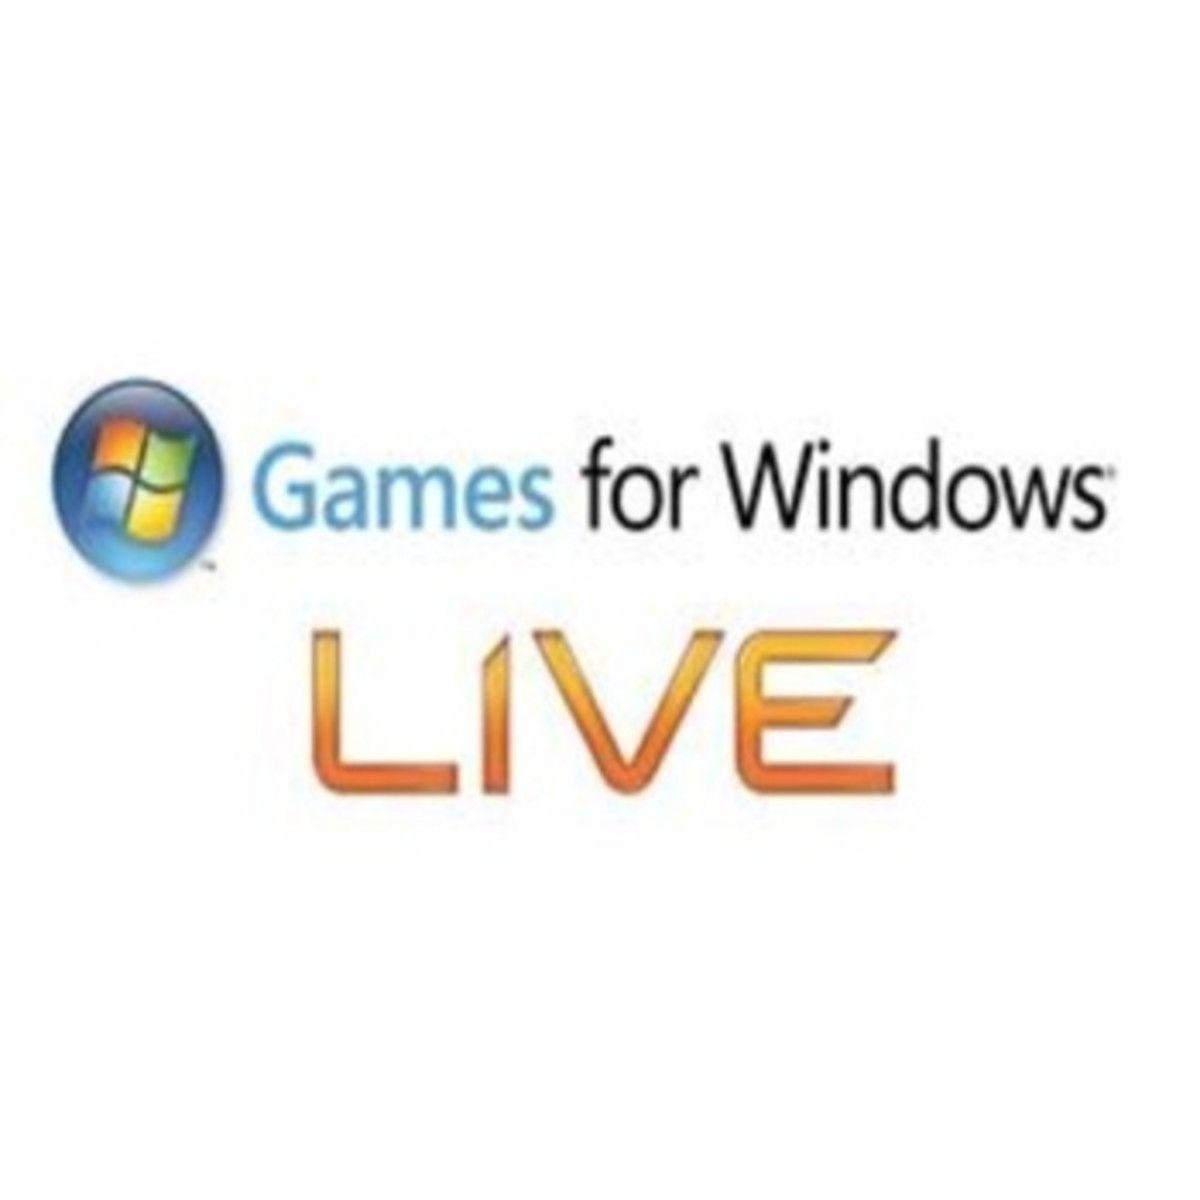 Games for Windows Live Logo - Microsoft's Games for Windows Live prepares to live no more - PC Retail